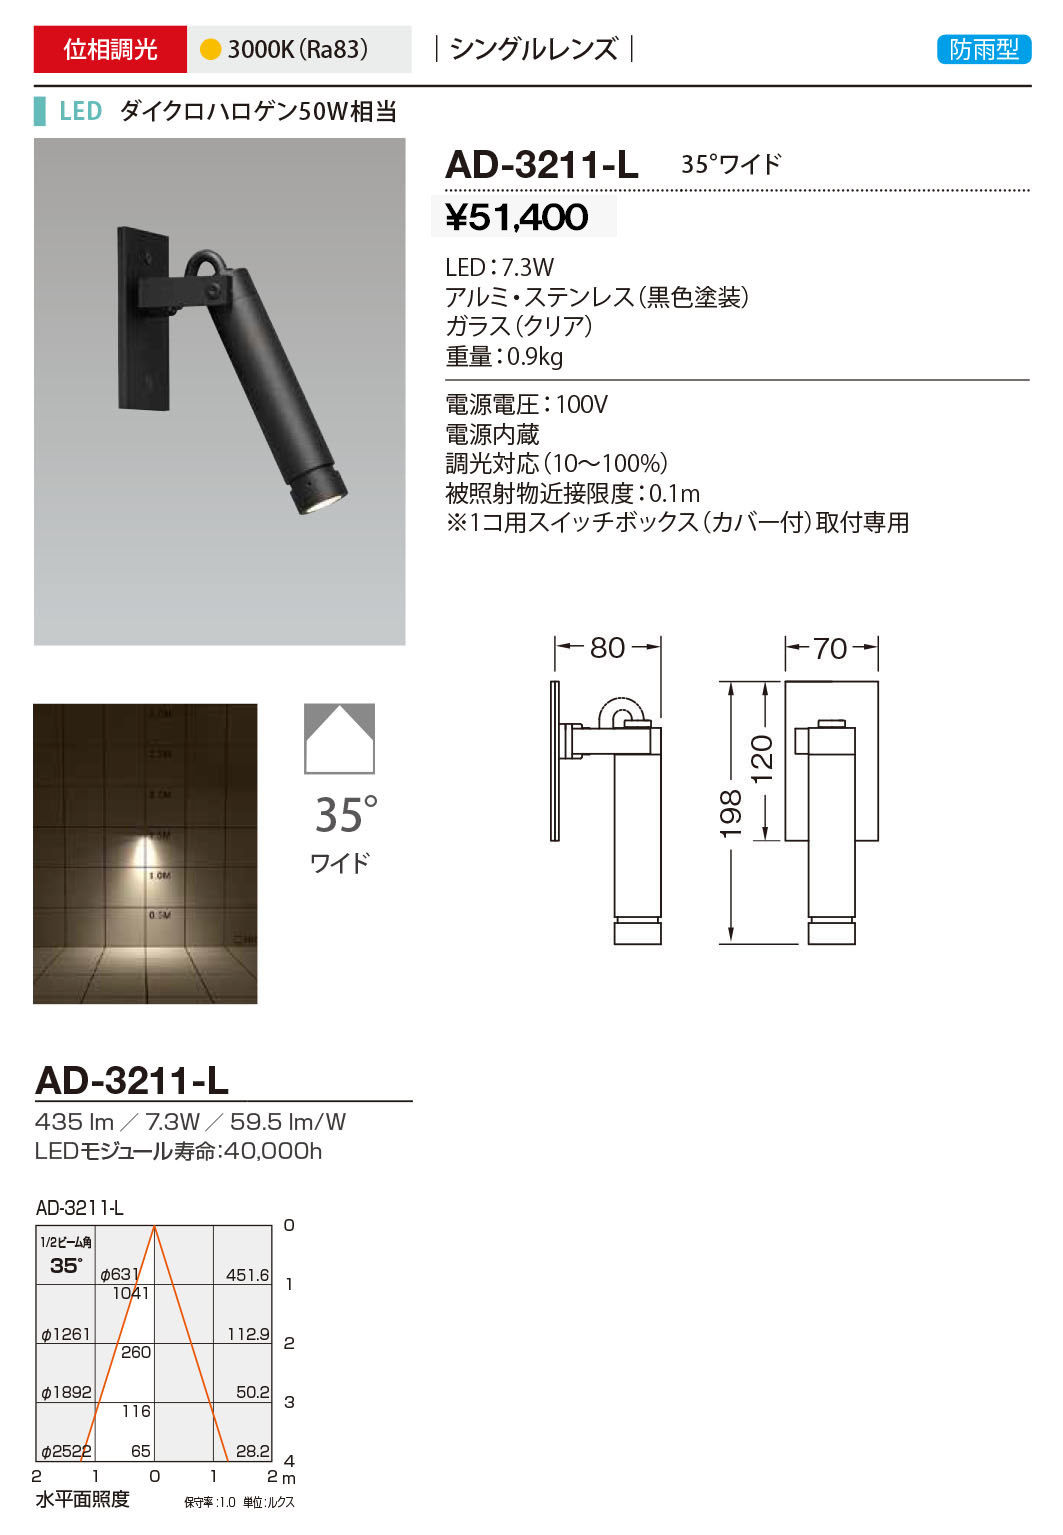 AD-3233-L 山田照明 屋外スポットライト 黒 LED 電球色 調光 中角 - 2